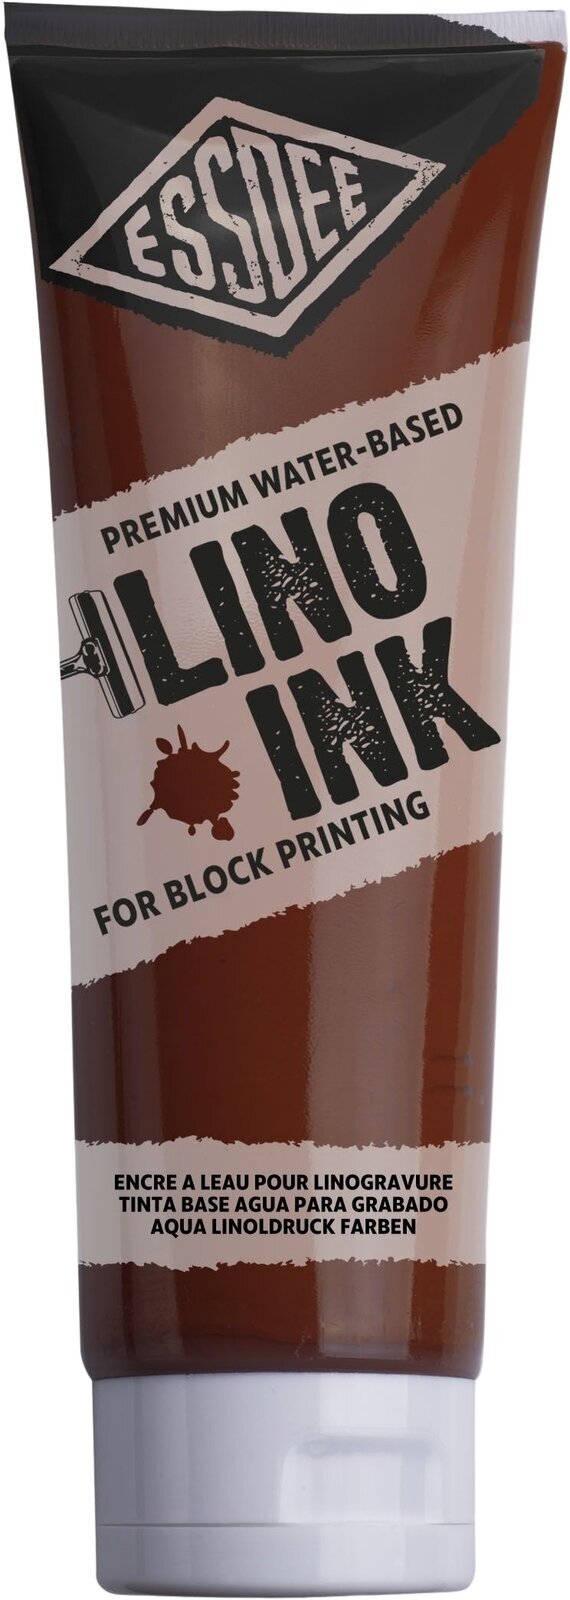 Farbe für Linolschnitt Essdee Block Printing Ink Farbe für Linolschnitt Burnt Sienna 300 ml